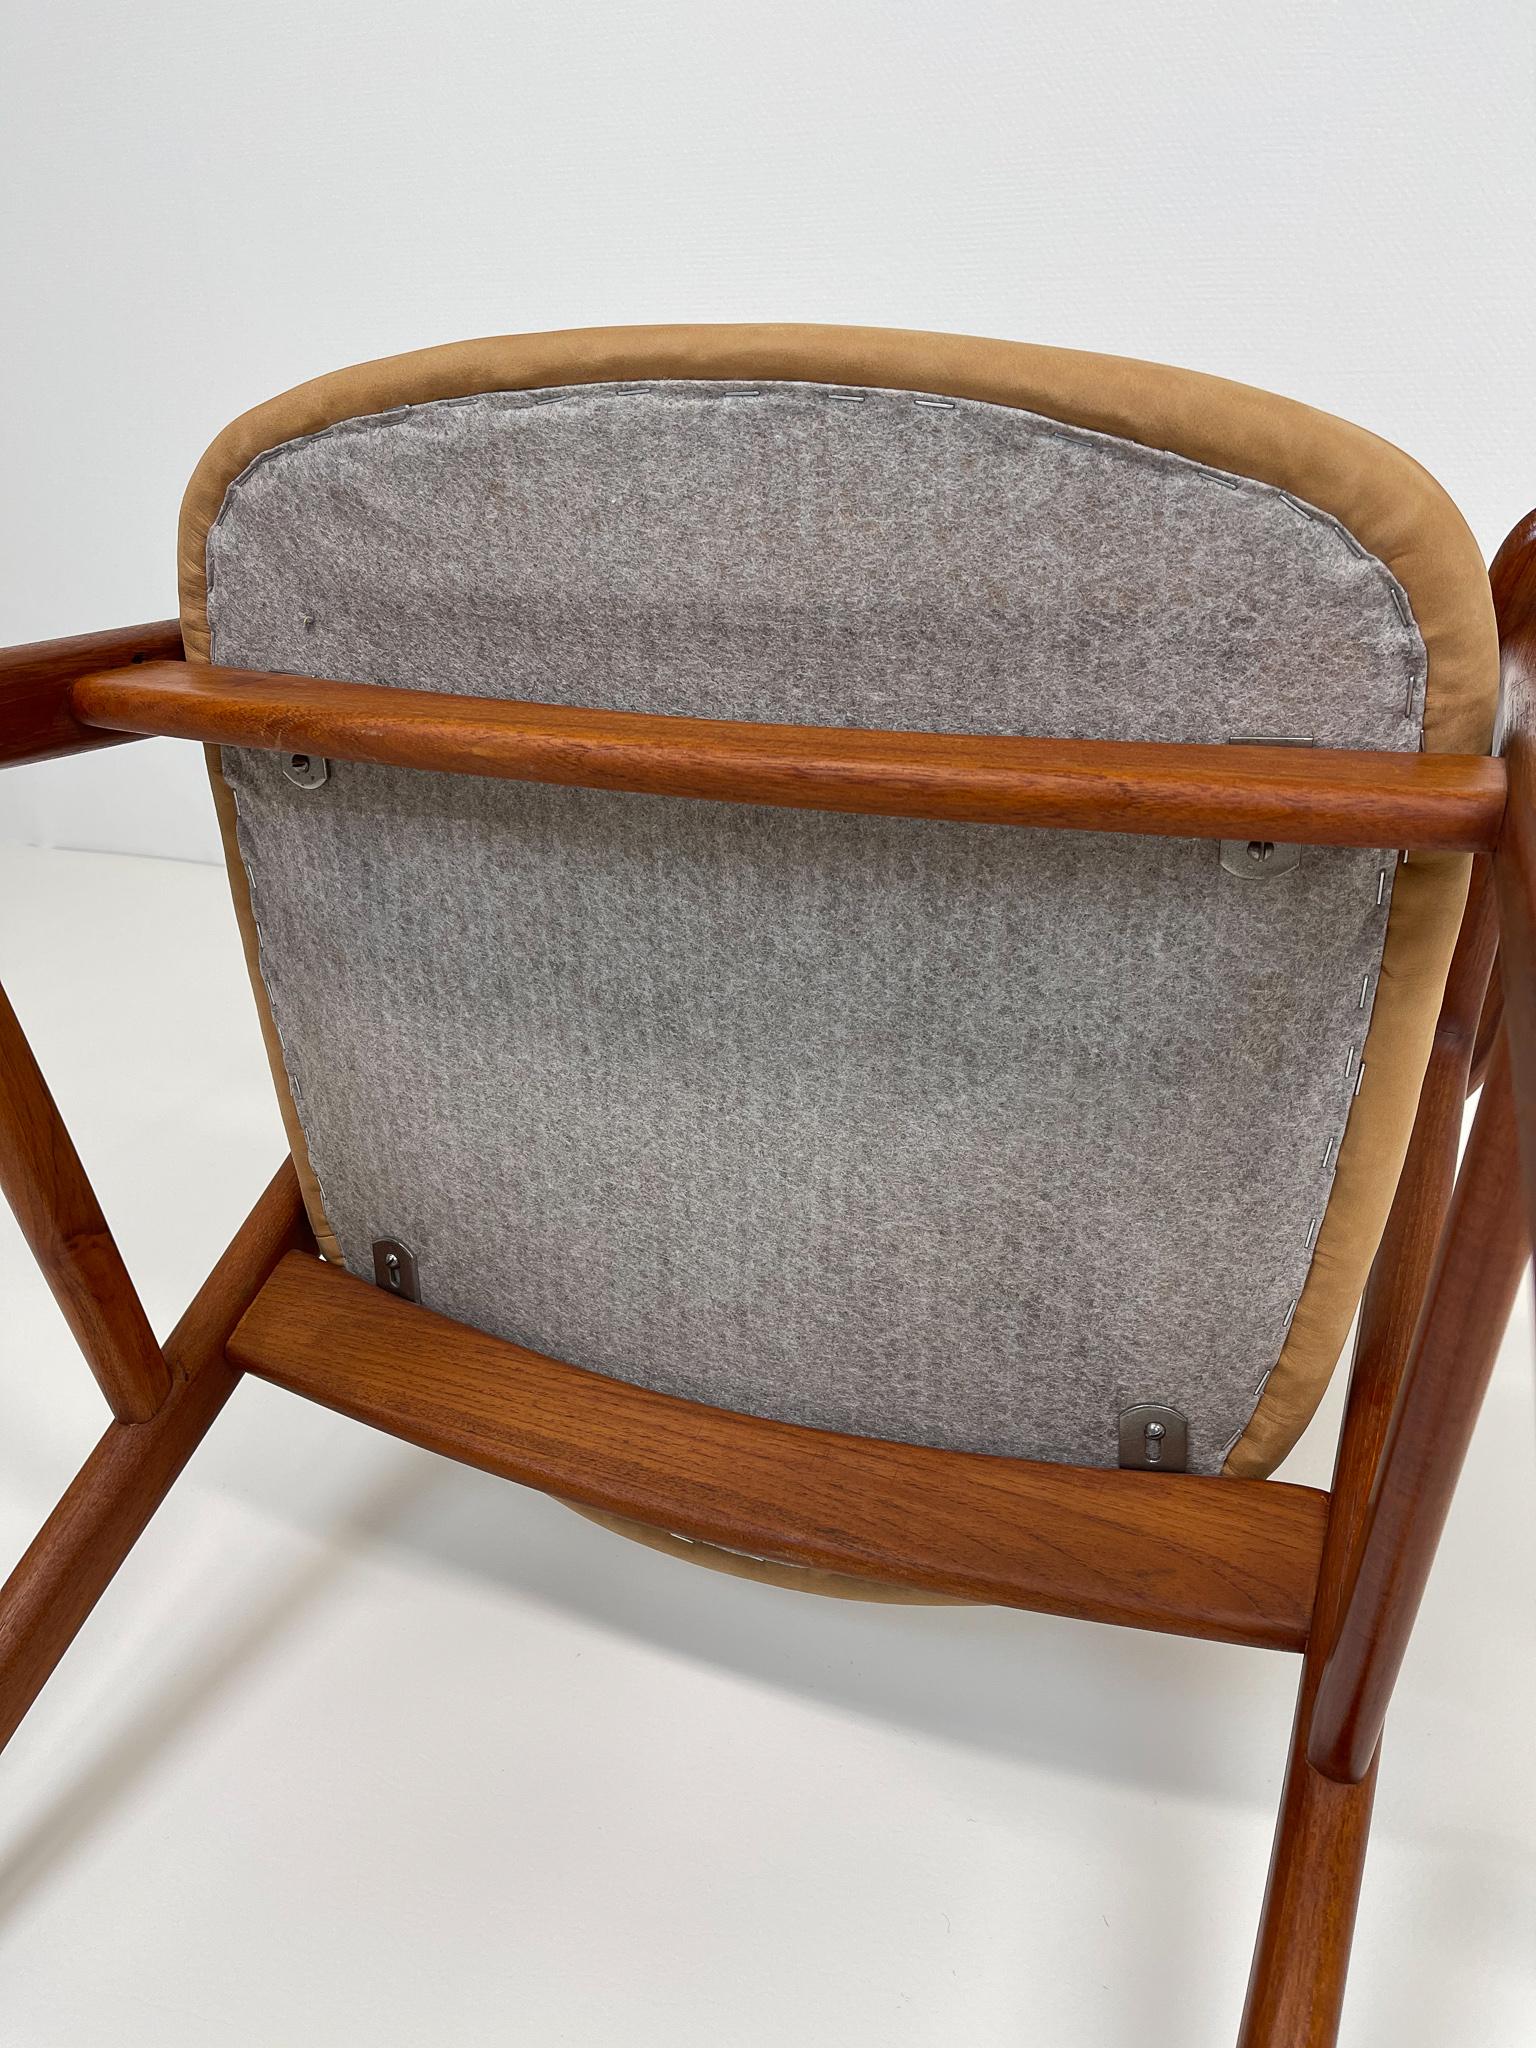 Midcentury Erik Kirkegaard Danish Teak and Leather Desk Chair, 1960s For Sale 8